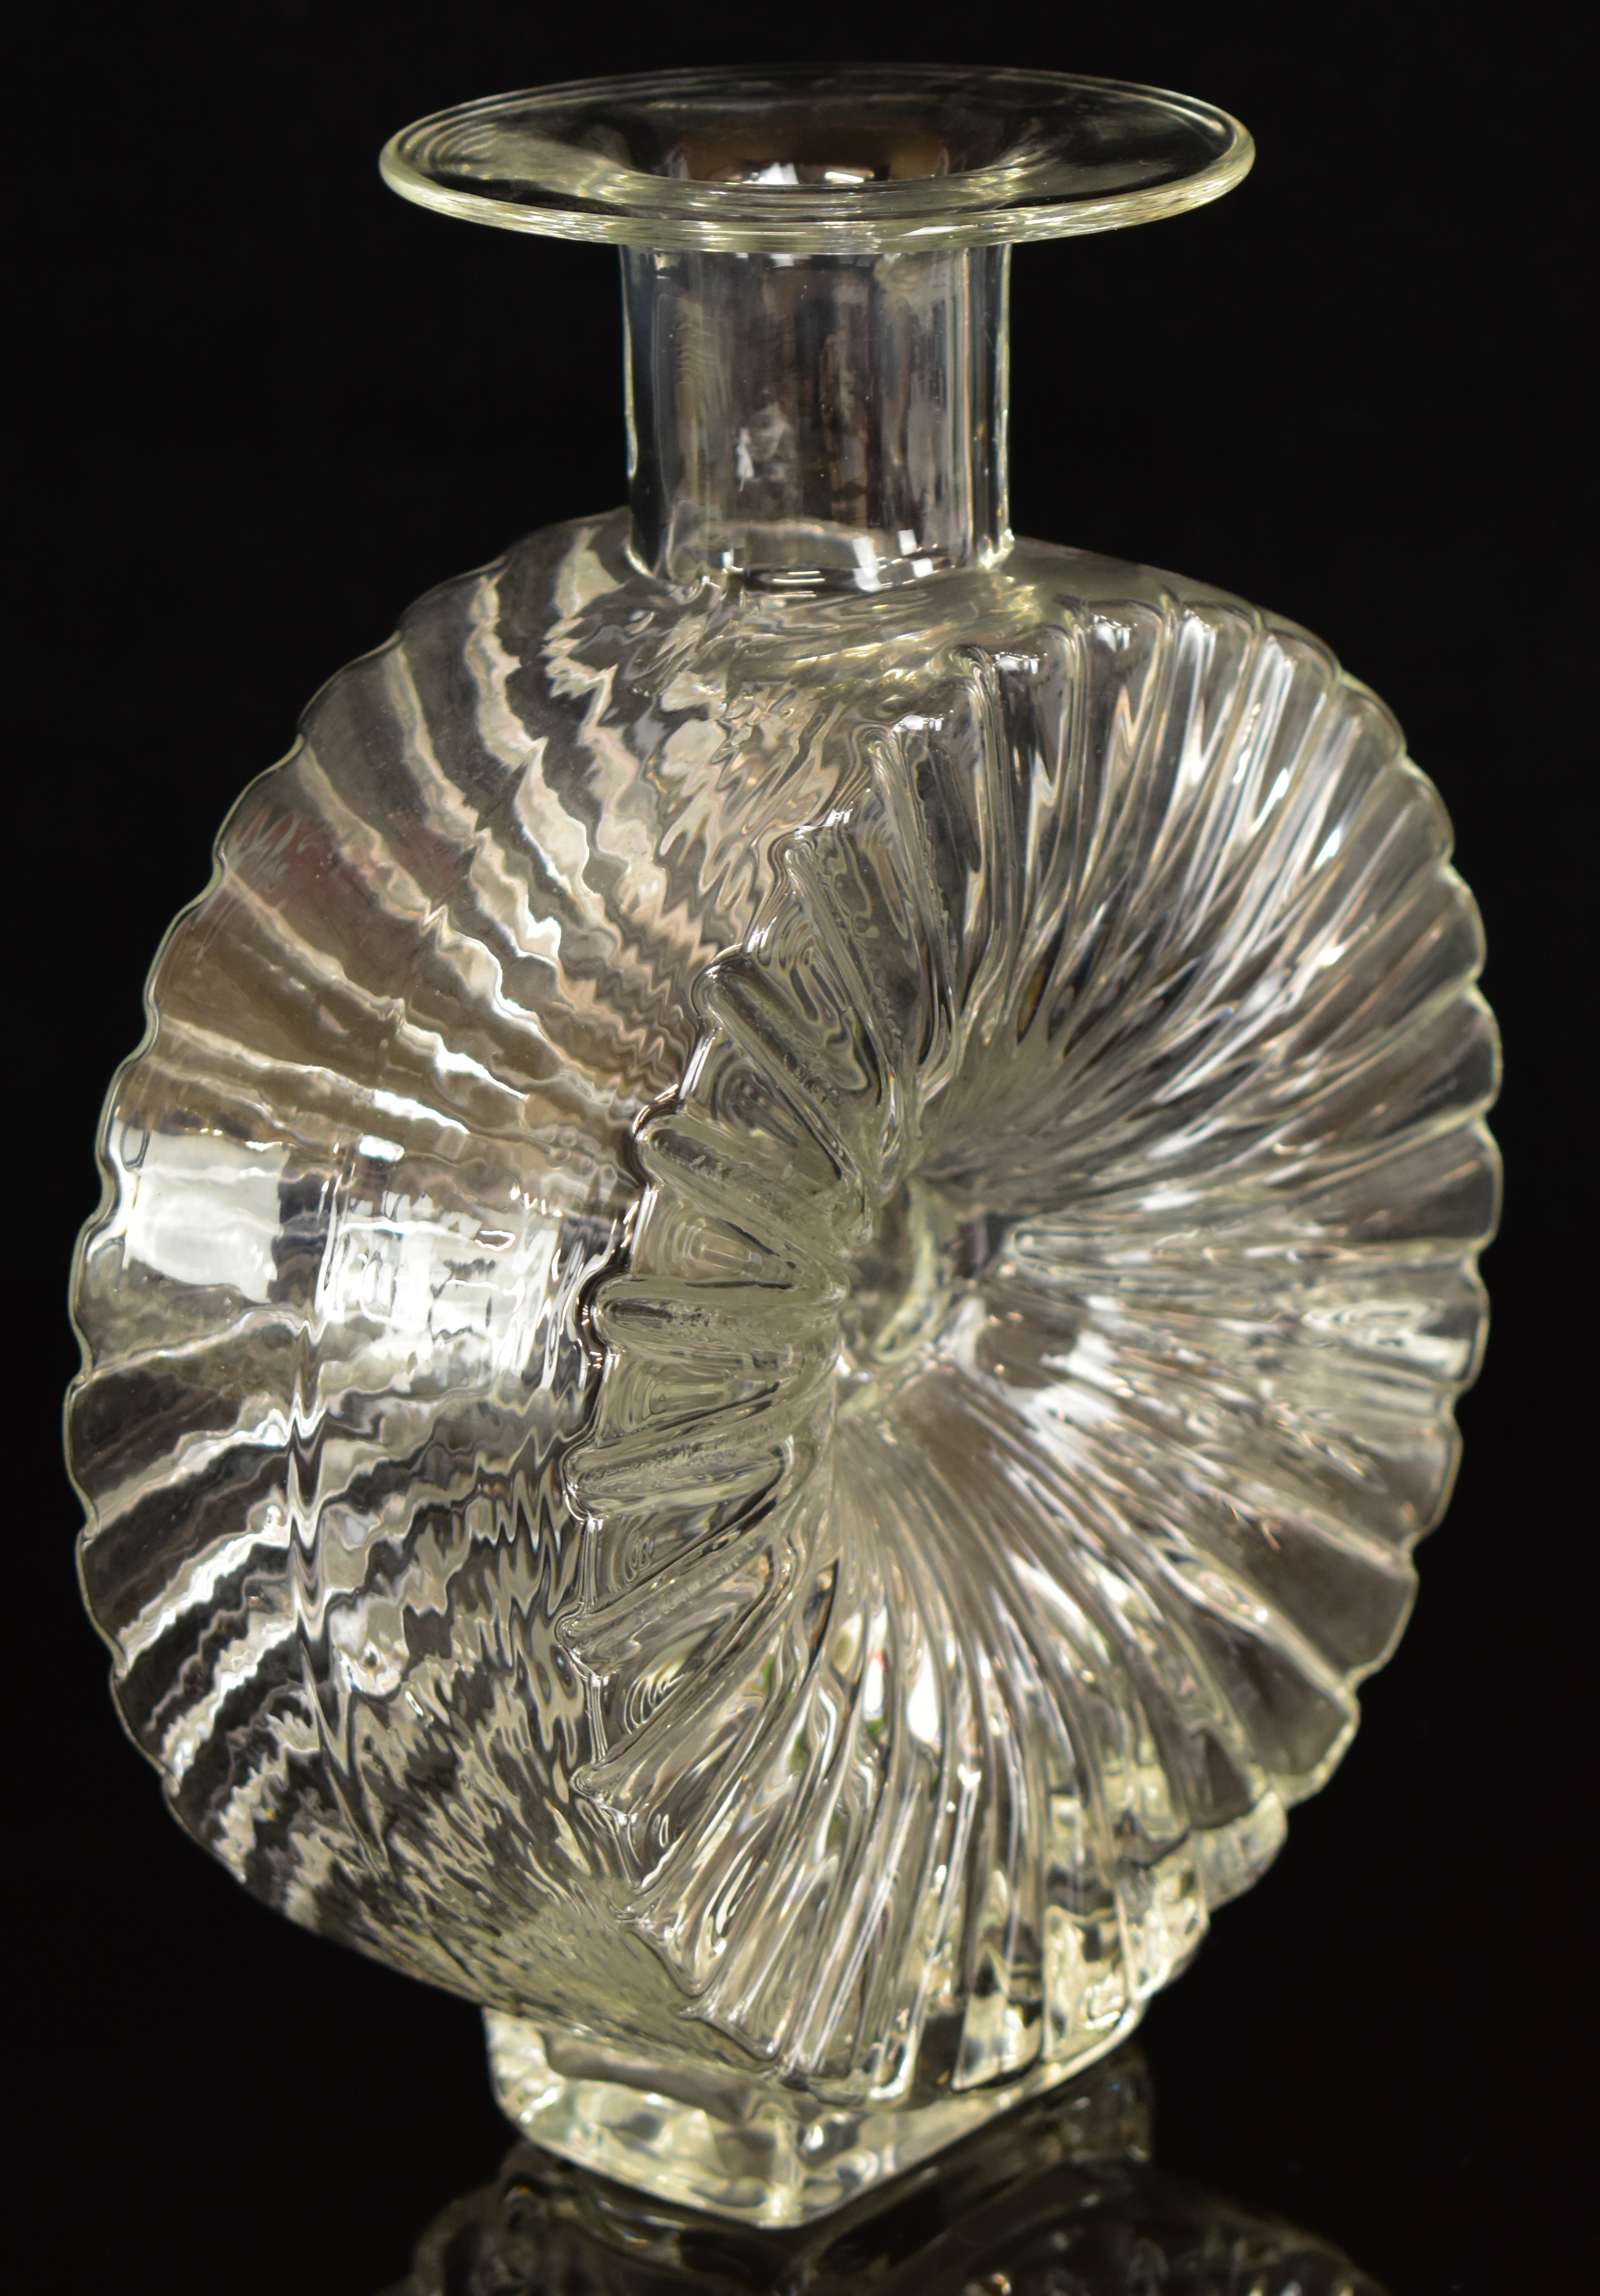 Helena Tynell for Riihimaen Lasi Riihimaki Aurinkopullo Sun Bottle clear glass vase, 23cm tall. - Image 4 of 4